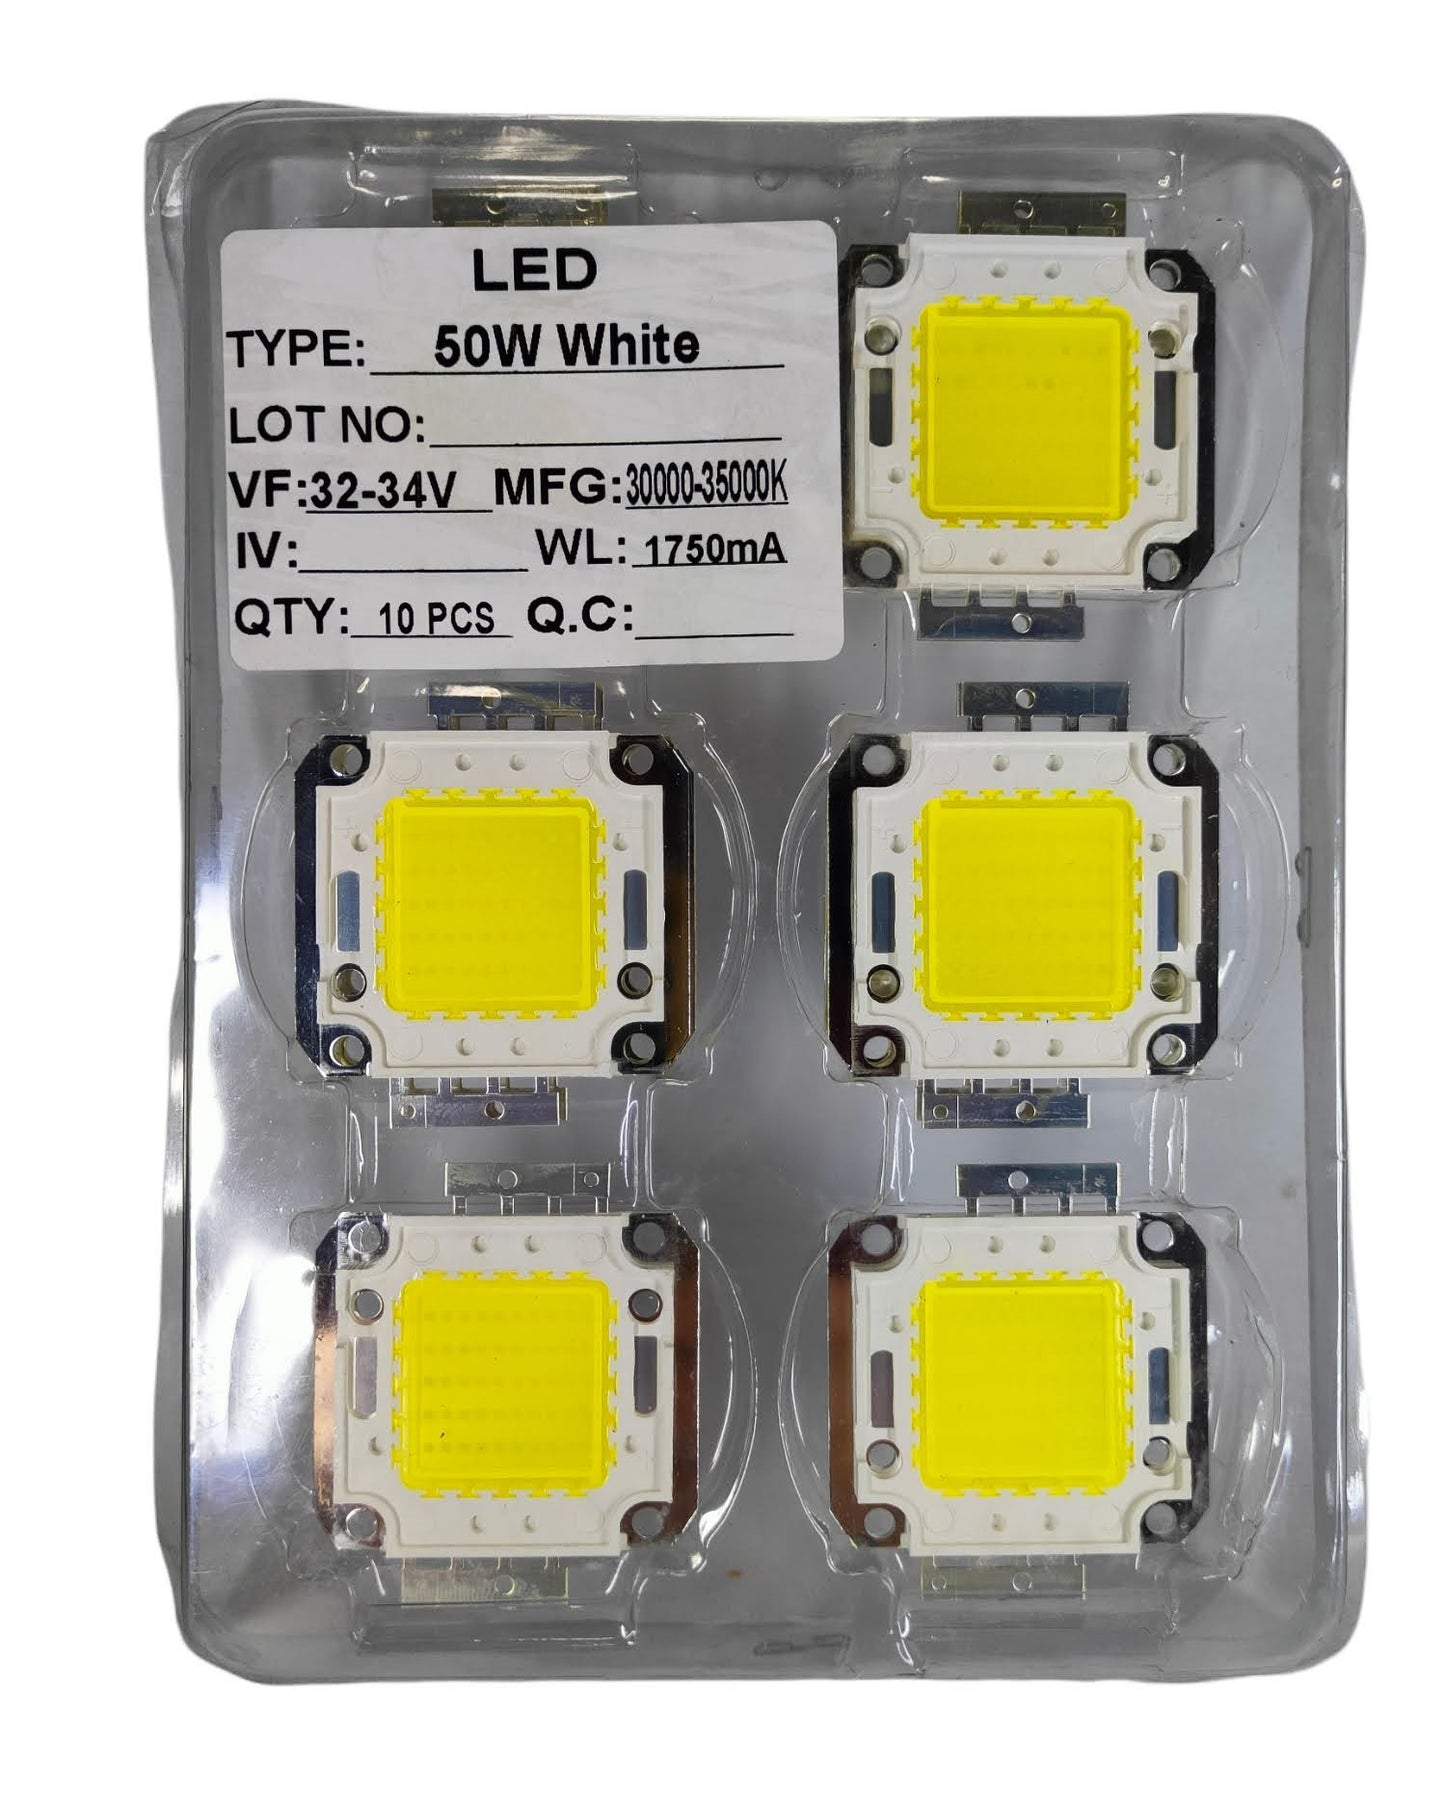 Chip LED de potencia 50w | Pastilla LED 34V DC| Repuesto LED para reflector